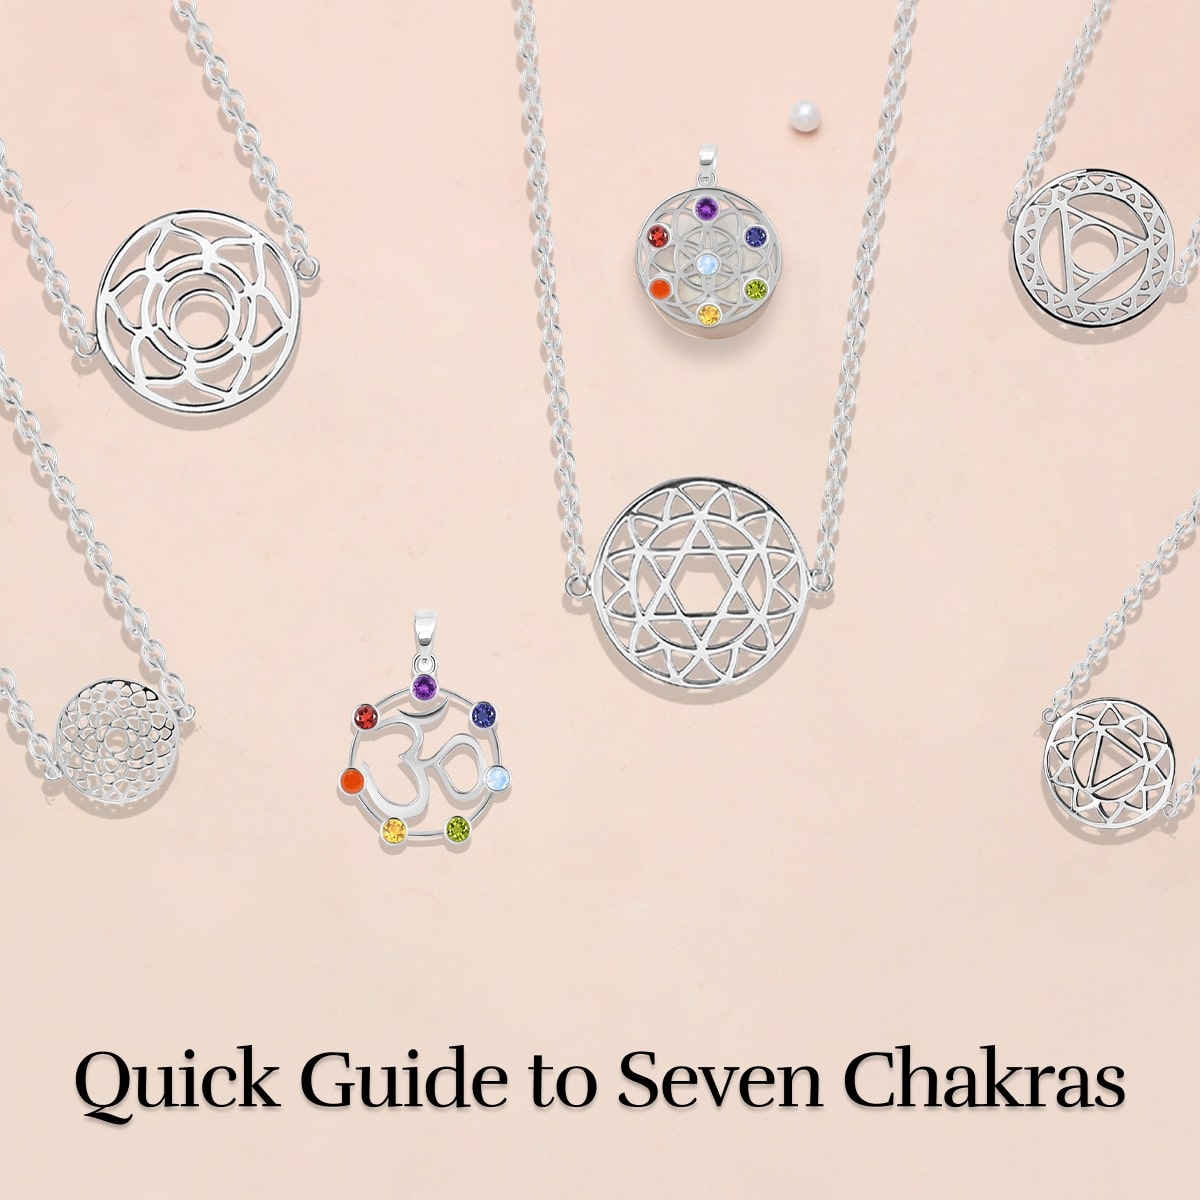 A Brief Summary of the Seven Chakras